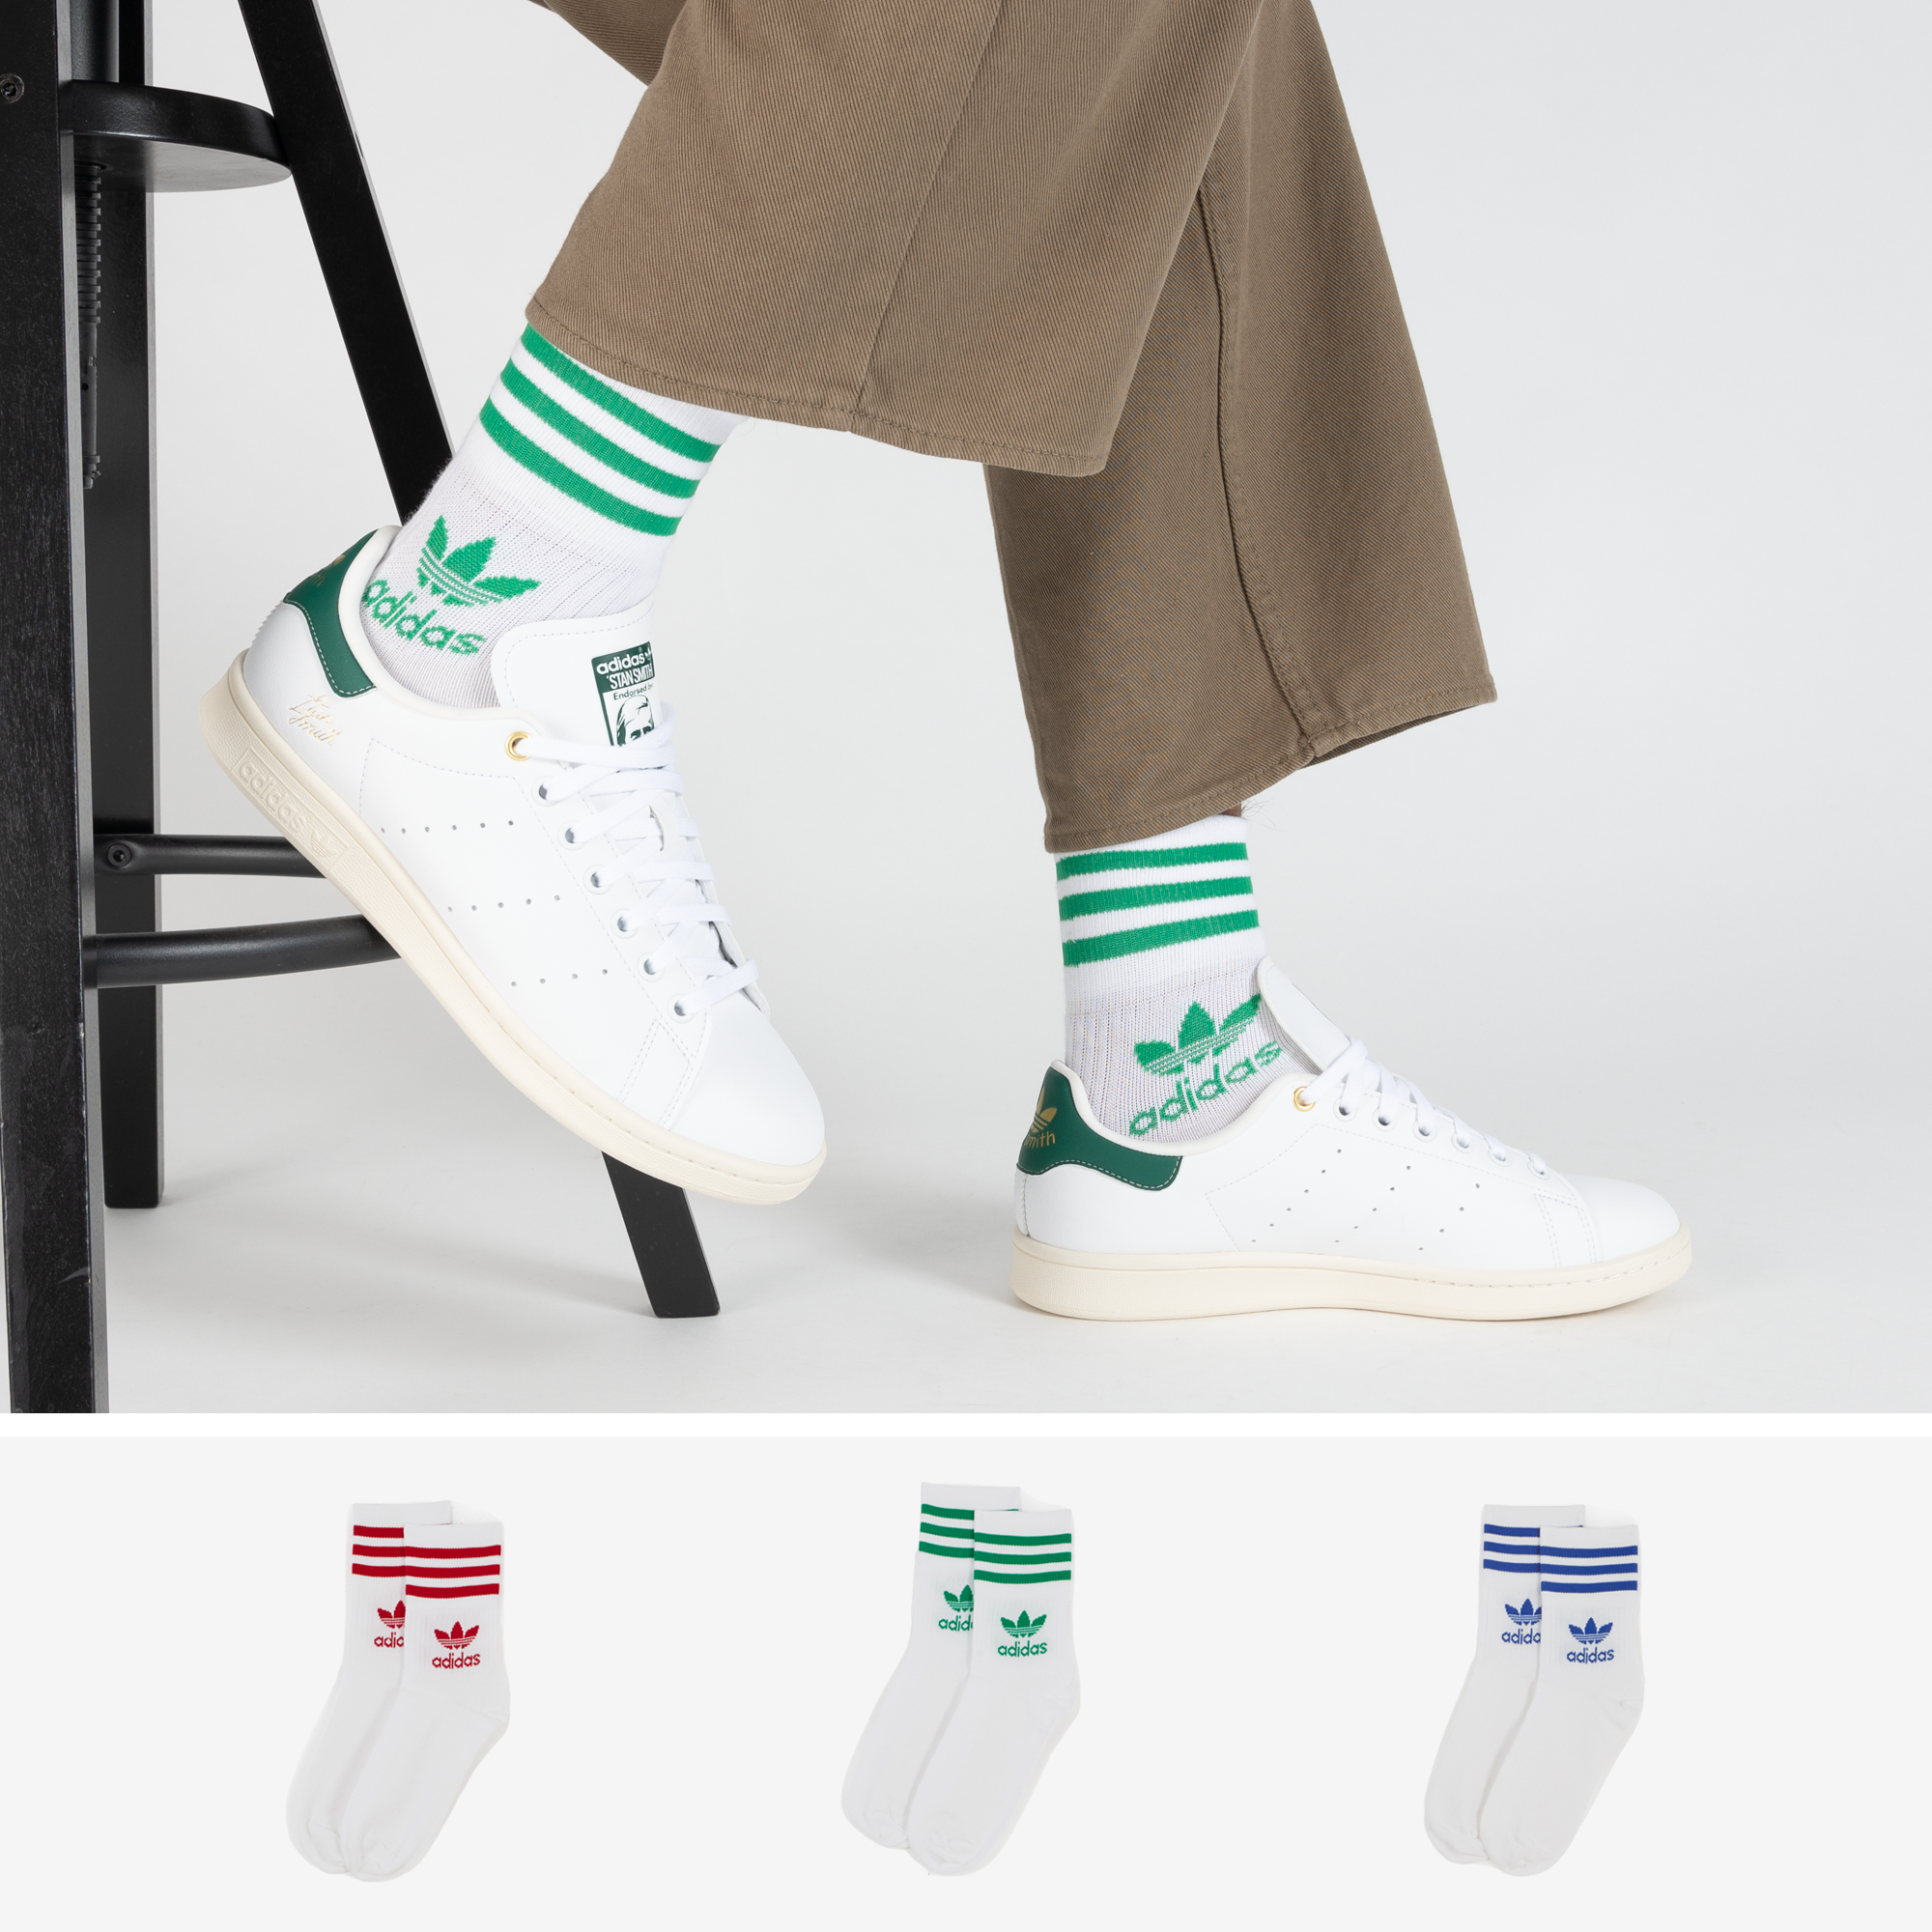 Adidas Originals Chaussettes X3 Mid Cut - Enfant blanc/multicolore 34/36 unisex